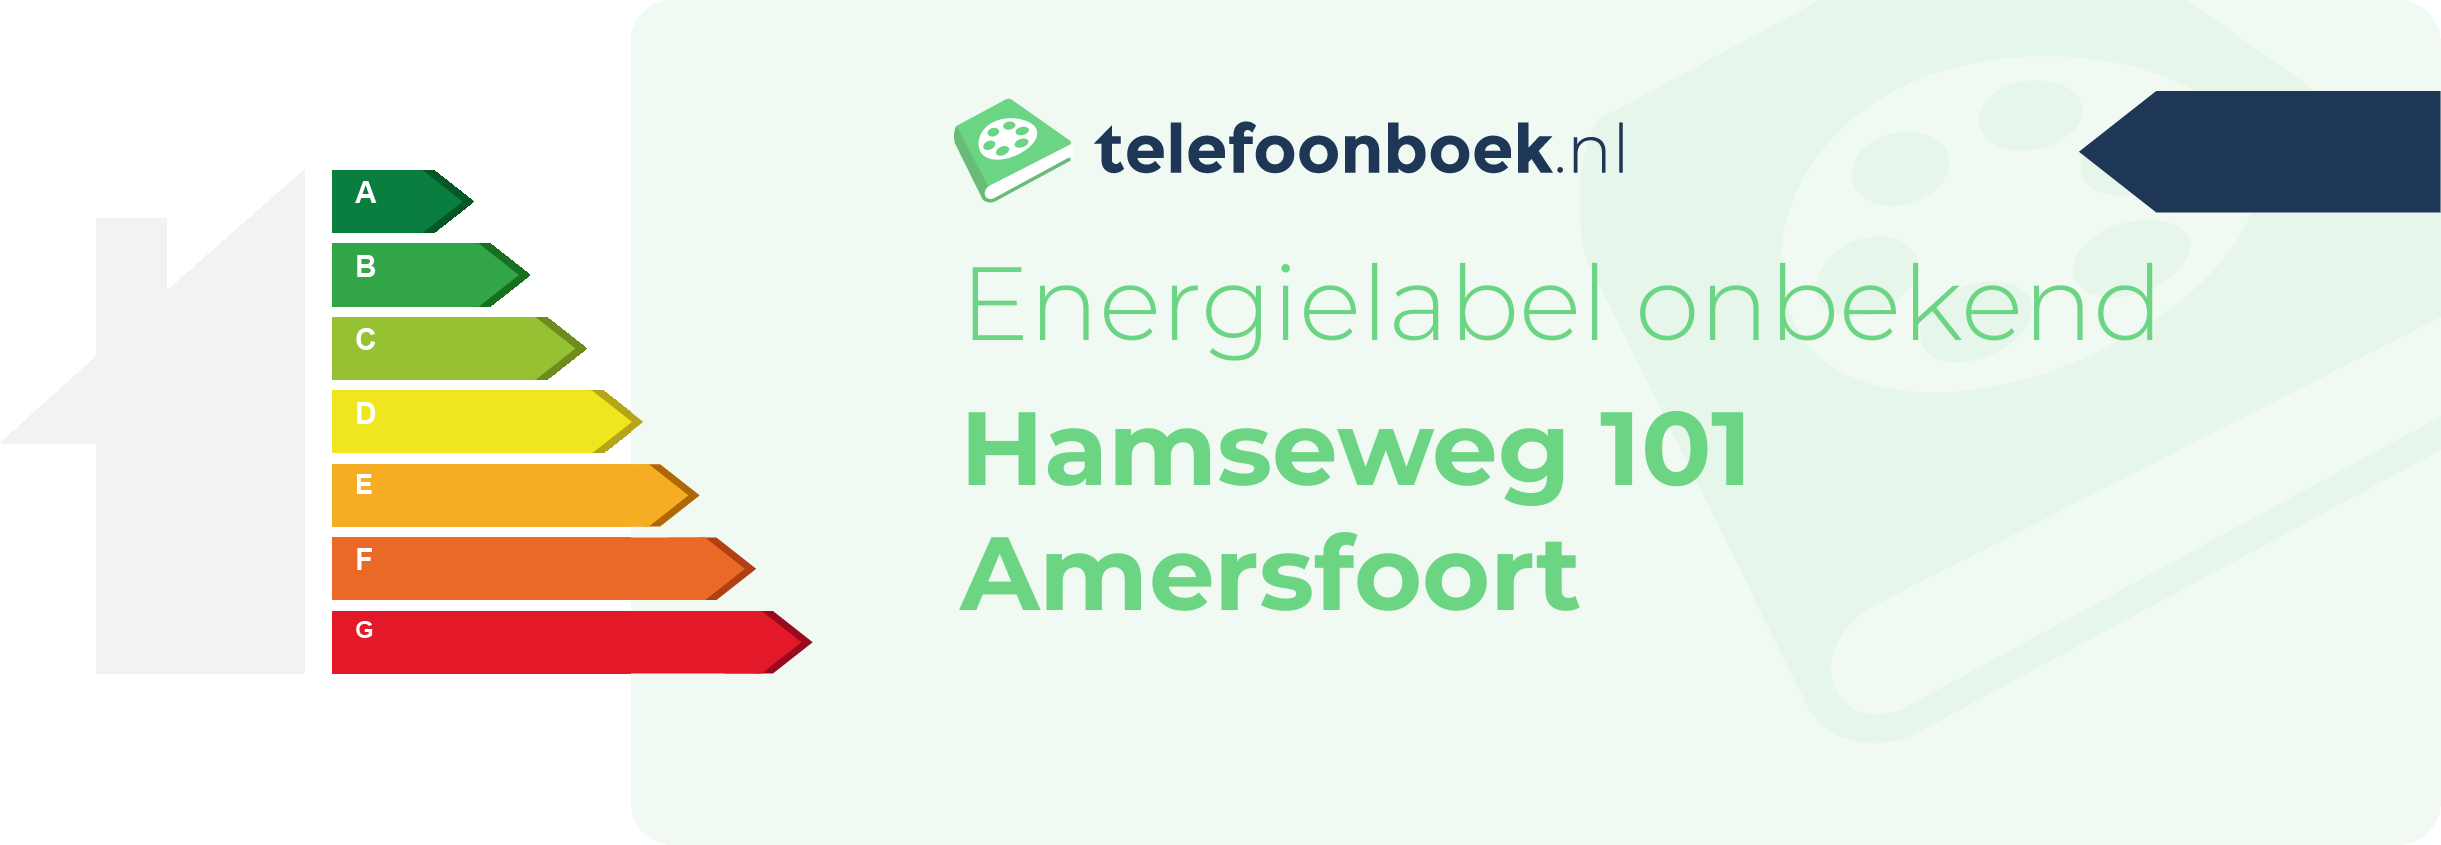 Energielabel Hamseweg 101 Amersfoort